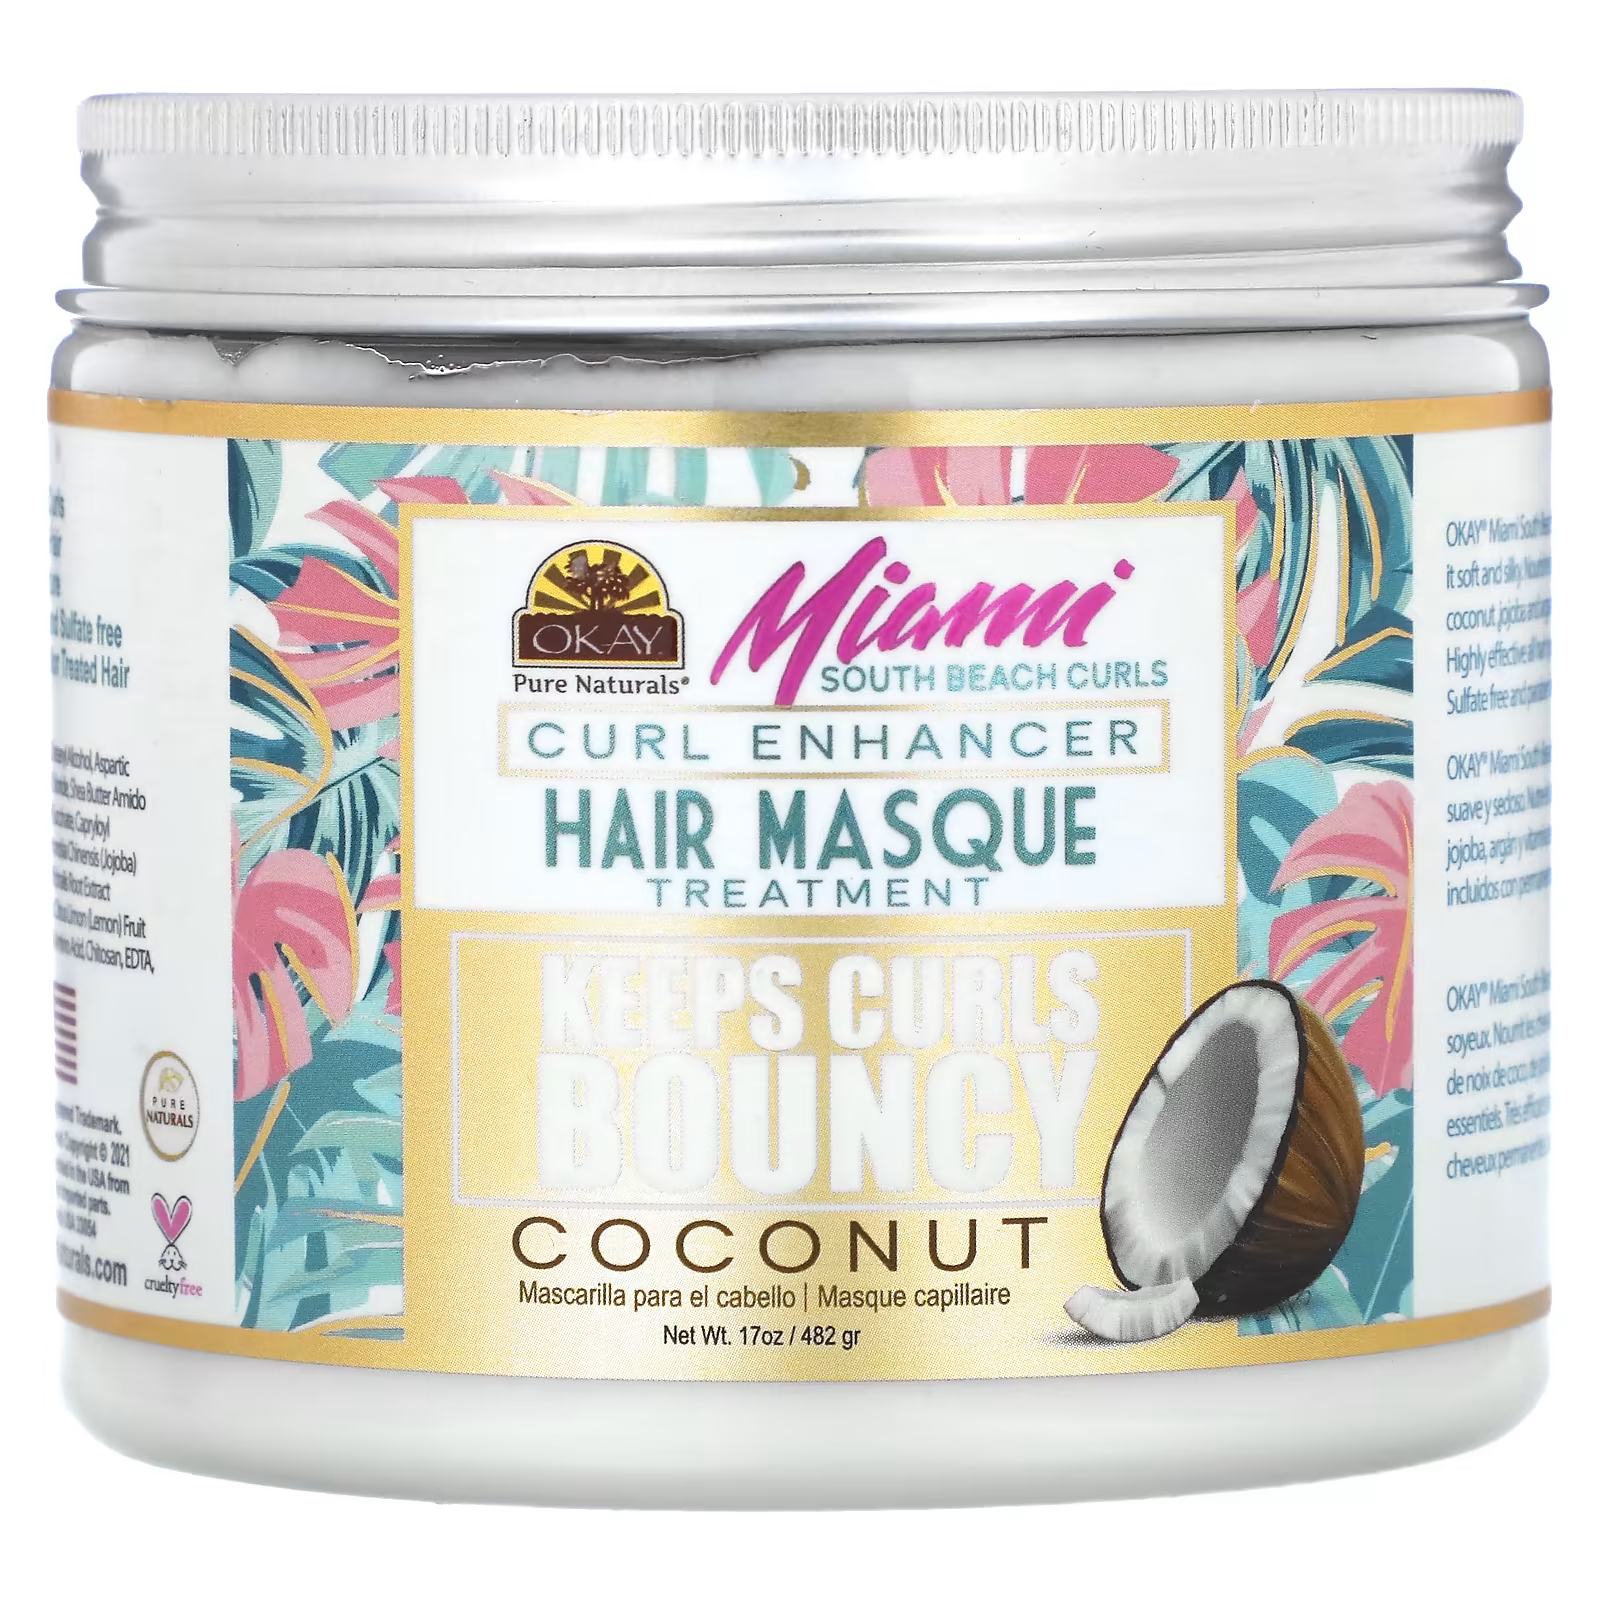 цена Маска для волос с кокосом Okay Pure Naturals Miami South Beach Curls Curl Enhancer, 482 г